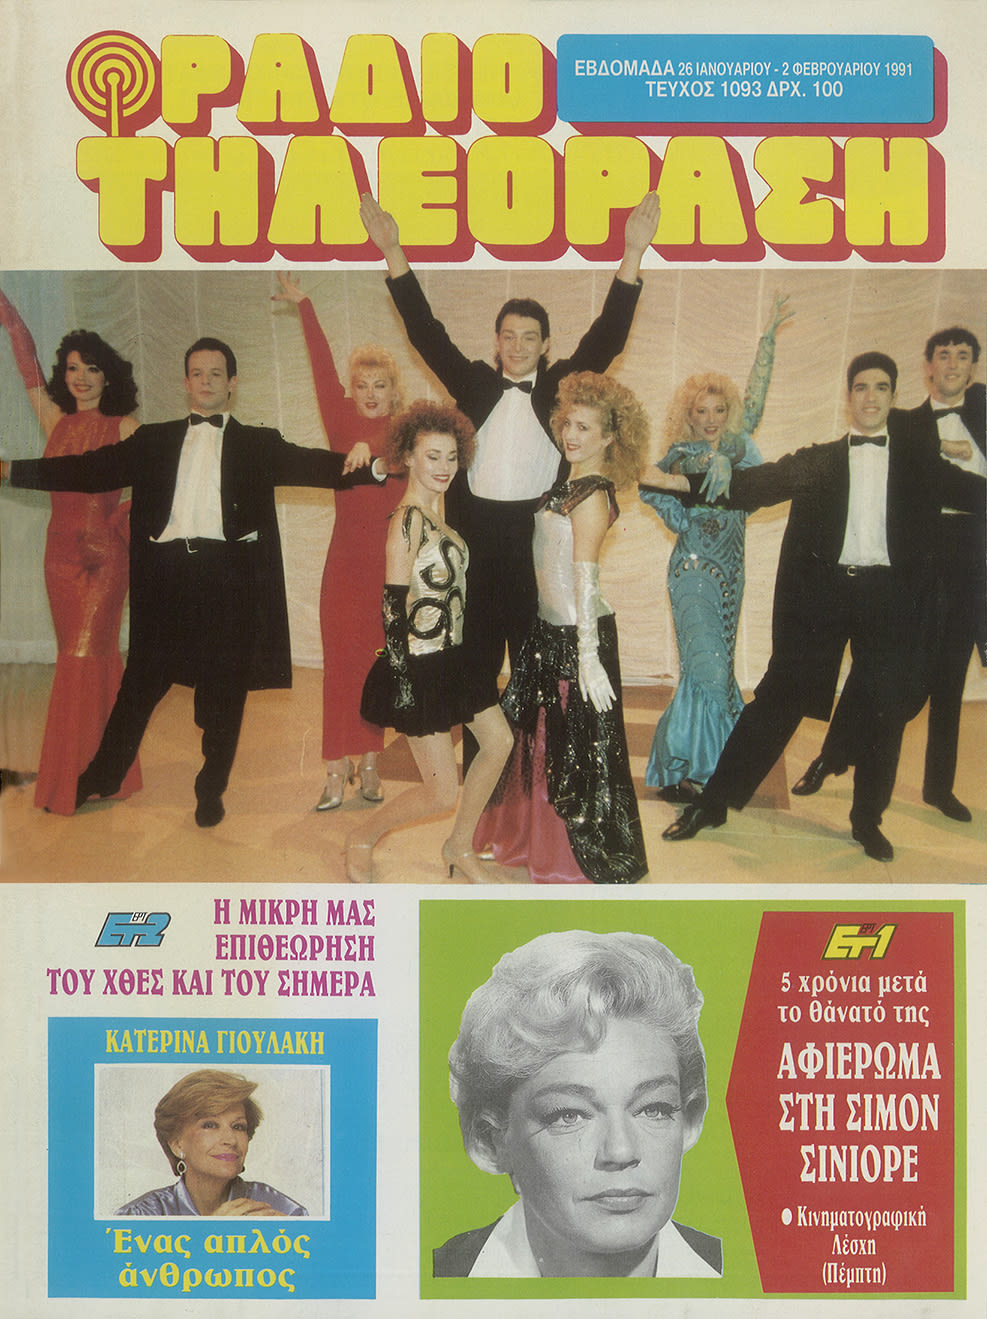 Cover of the magazine “Radiotileorasi” (“Radio-Television”), issue 1093, 26/1/1991– 2/2/1991, ERT Archives. © In copyright